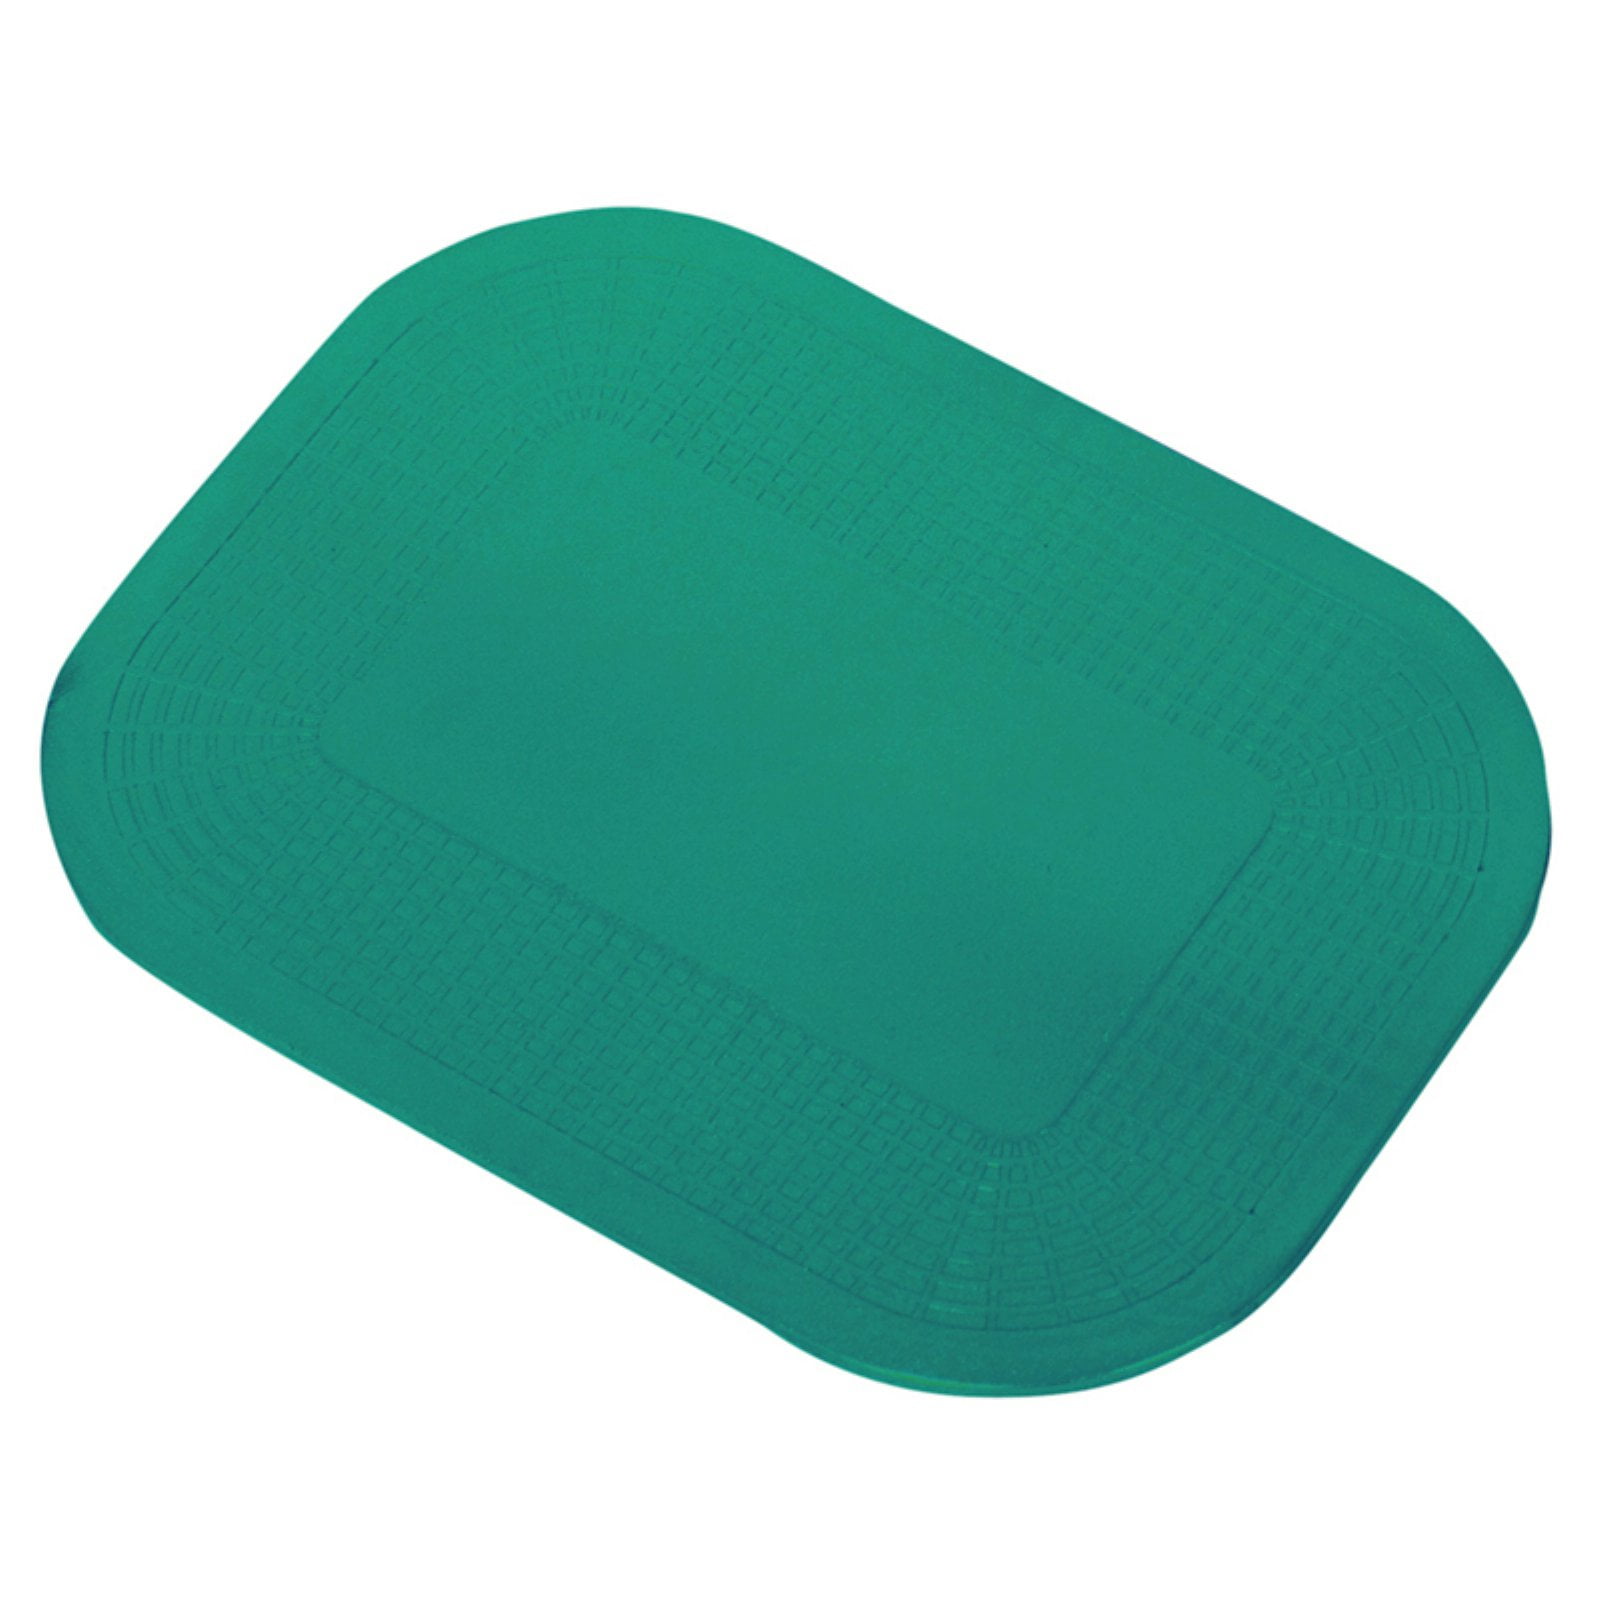 Dycem non-slip rectangular pad, 15